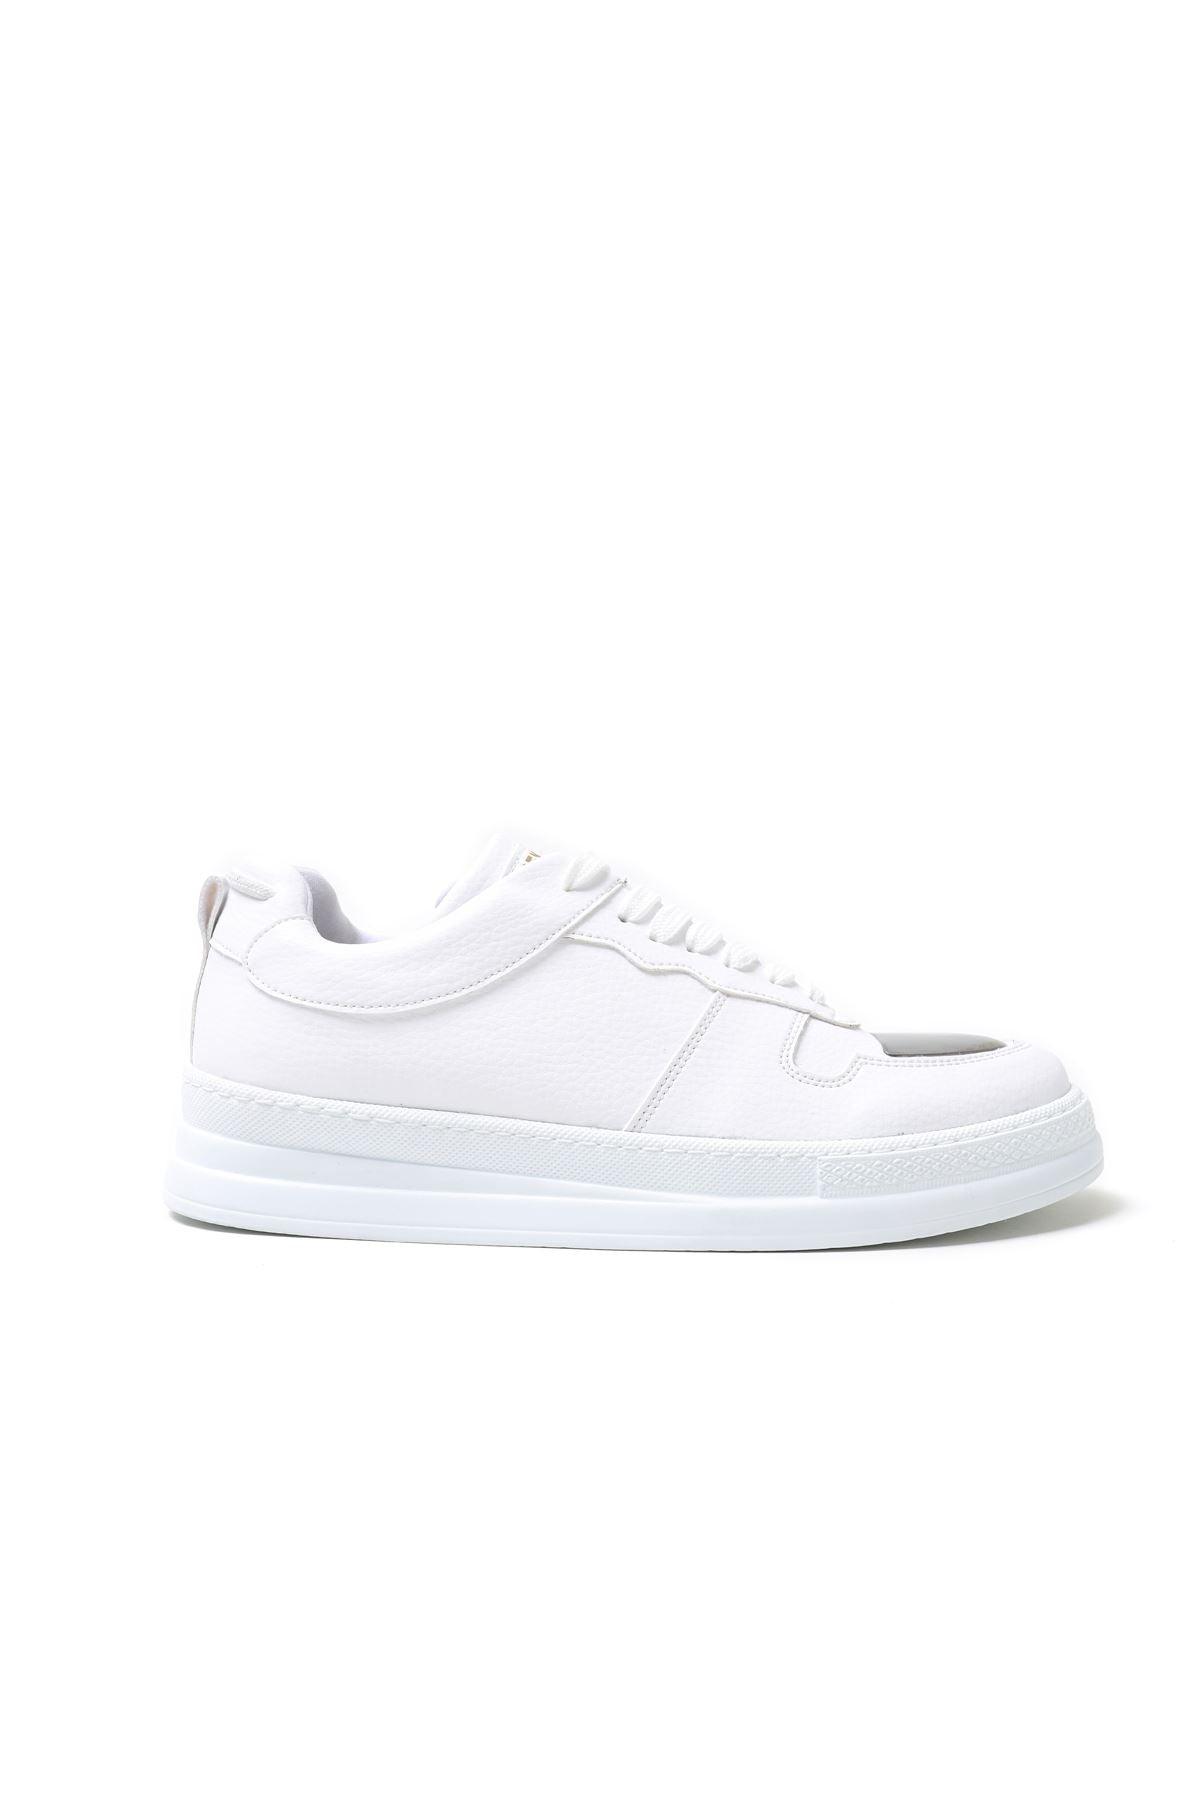 CH185 BT Men's Shoes WHITE - STREET MODE ™